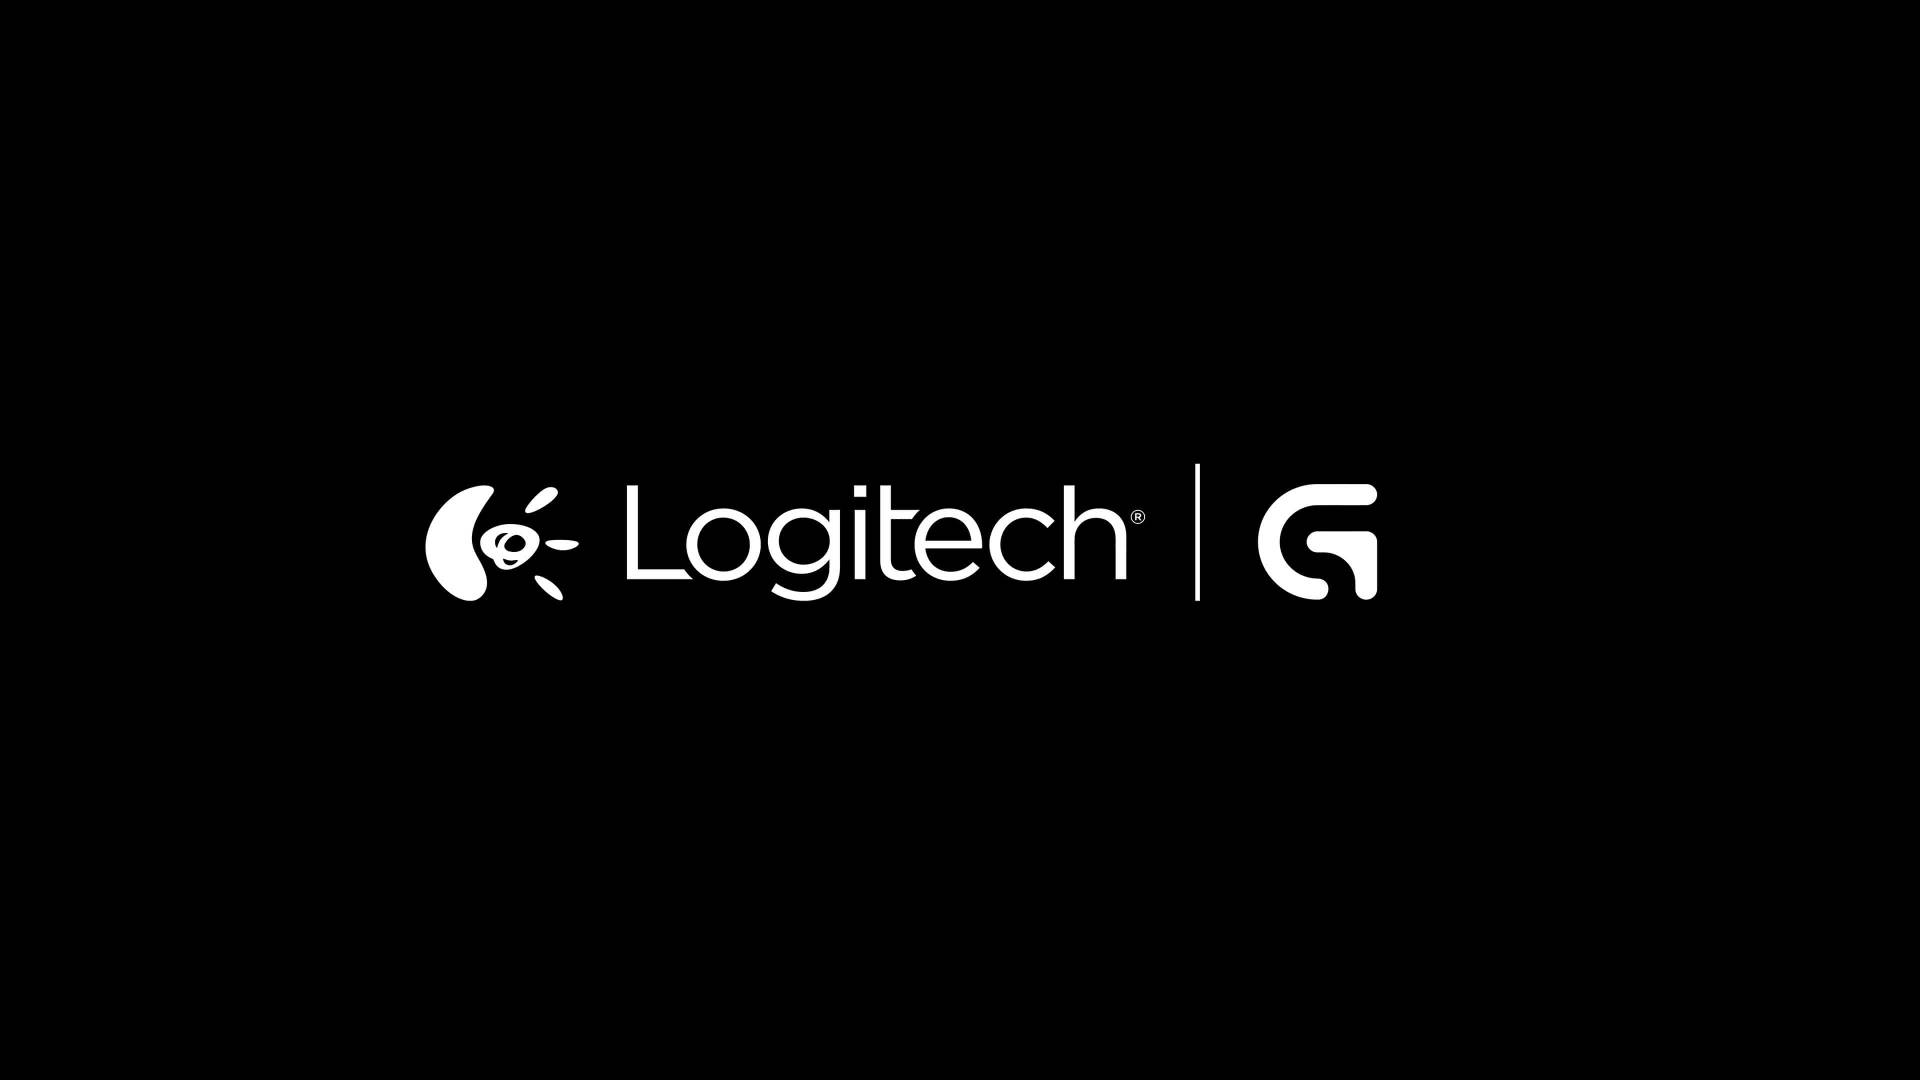 Download Official Logitech Logos Wallpaper Wallpapers Com